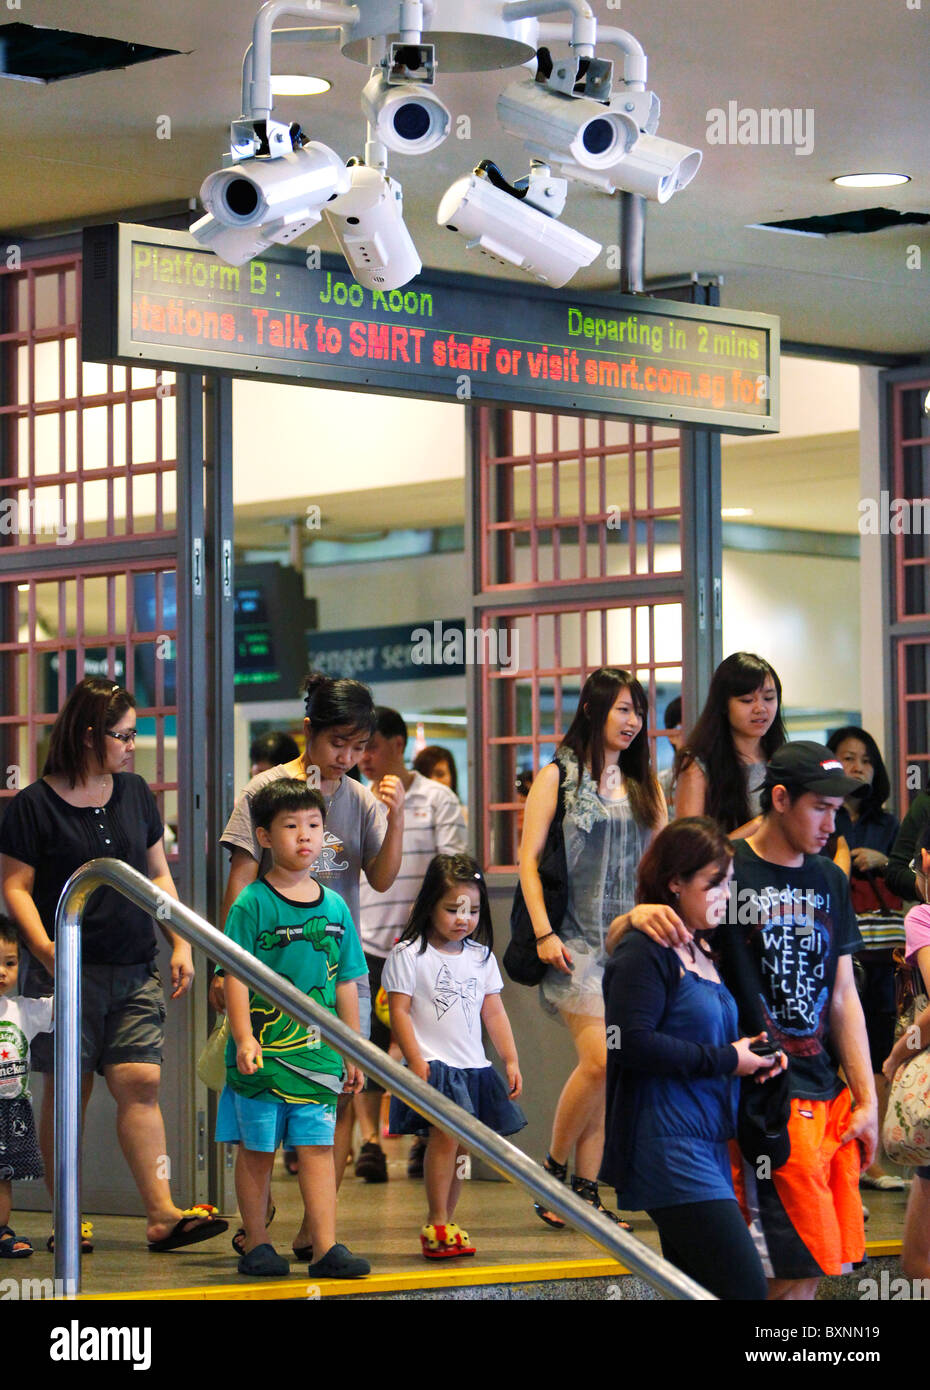 Singapore, Exit of a MRT (Mass Rapid Transit) subway station under video camera surveillance Stock Photo